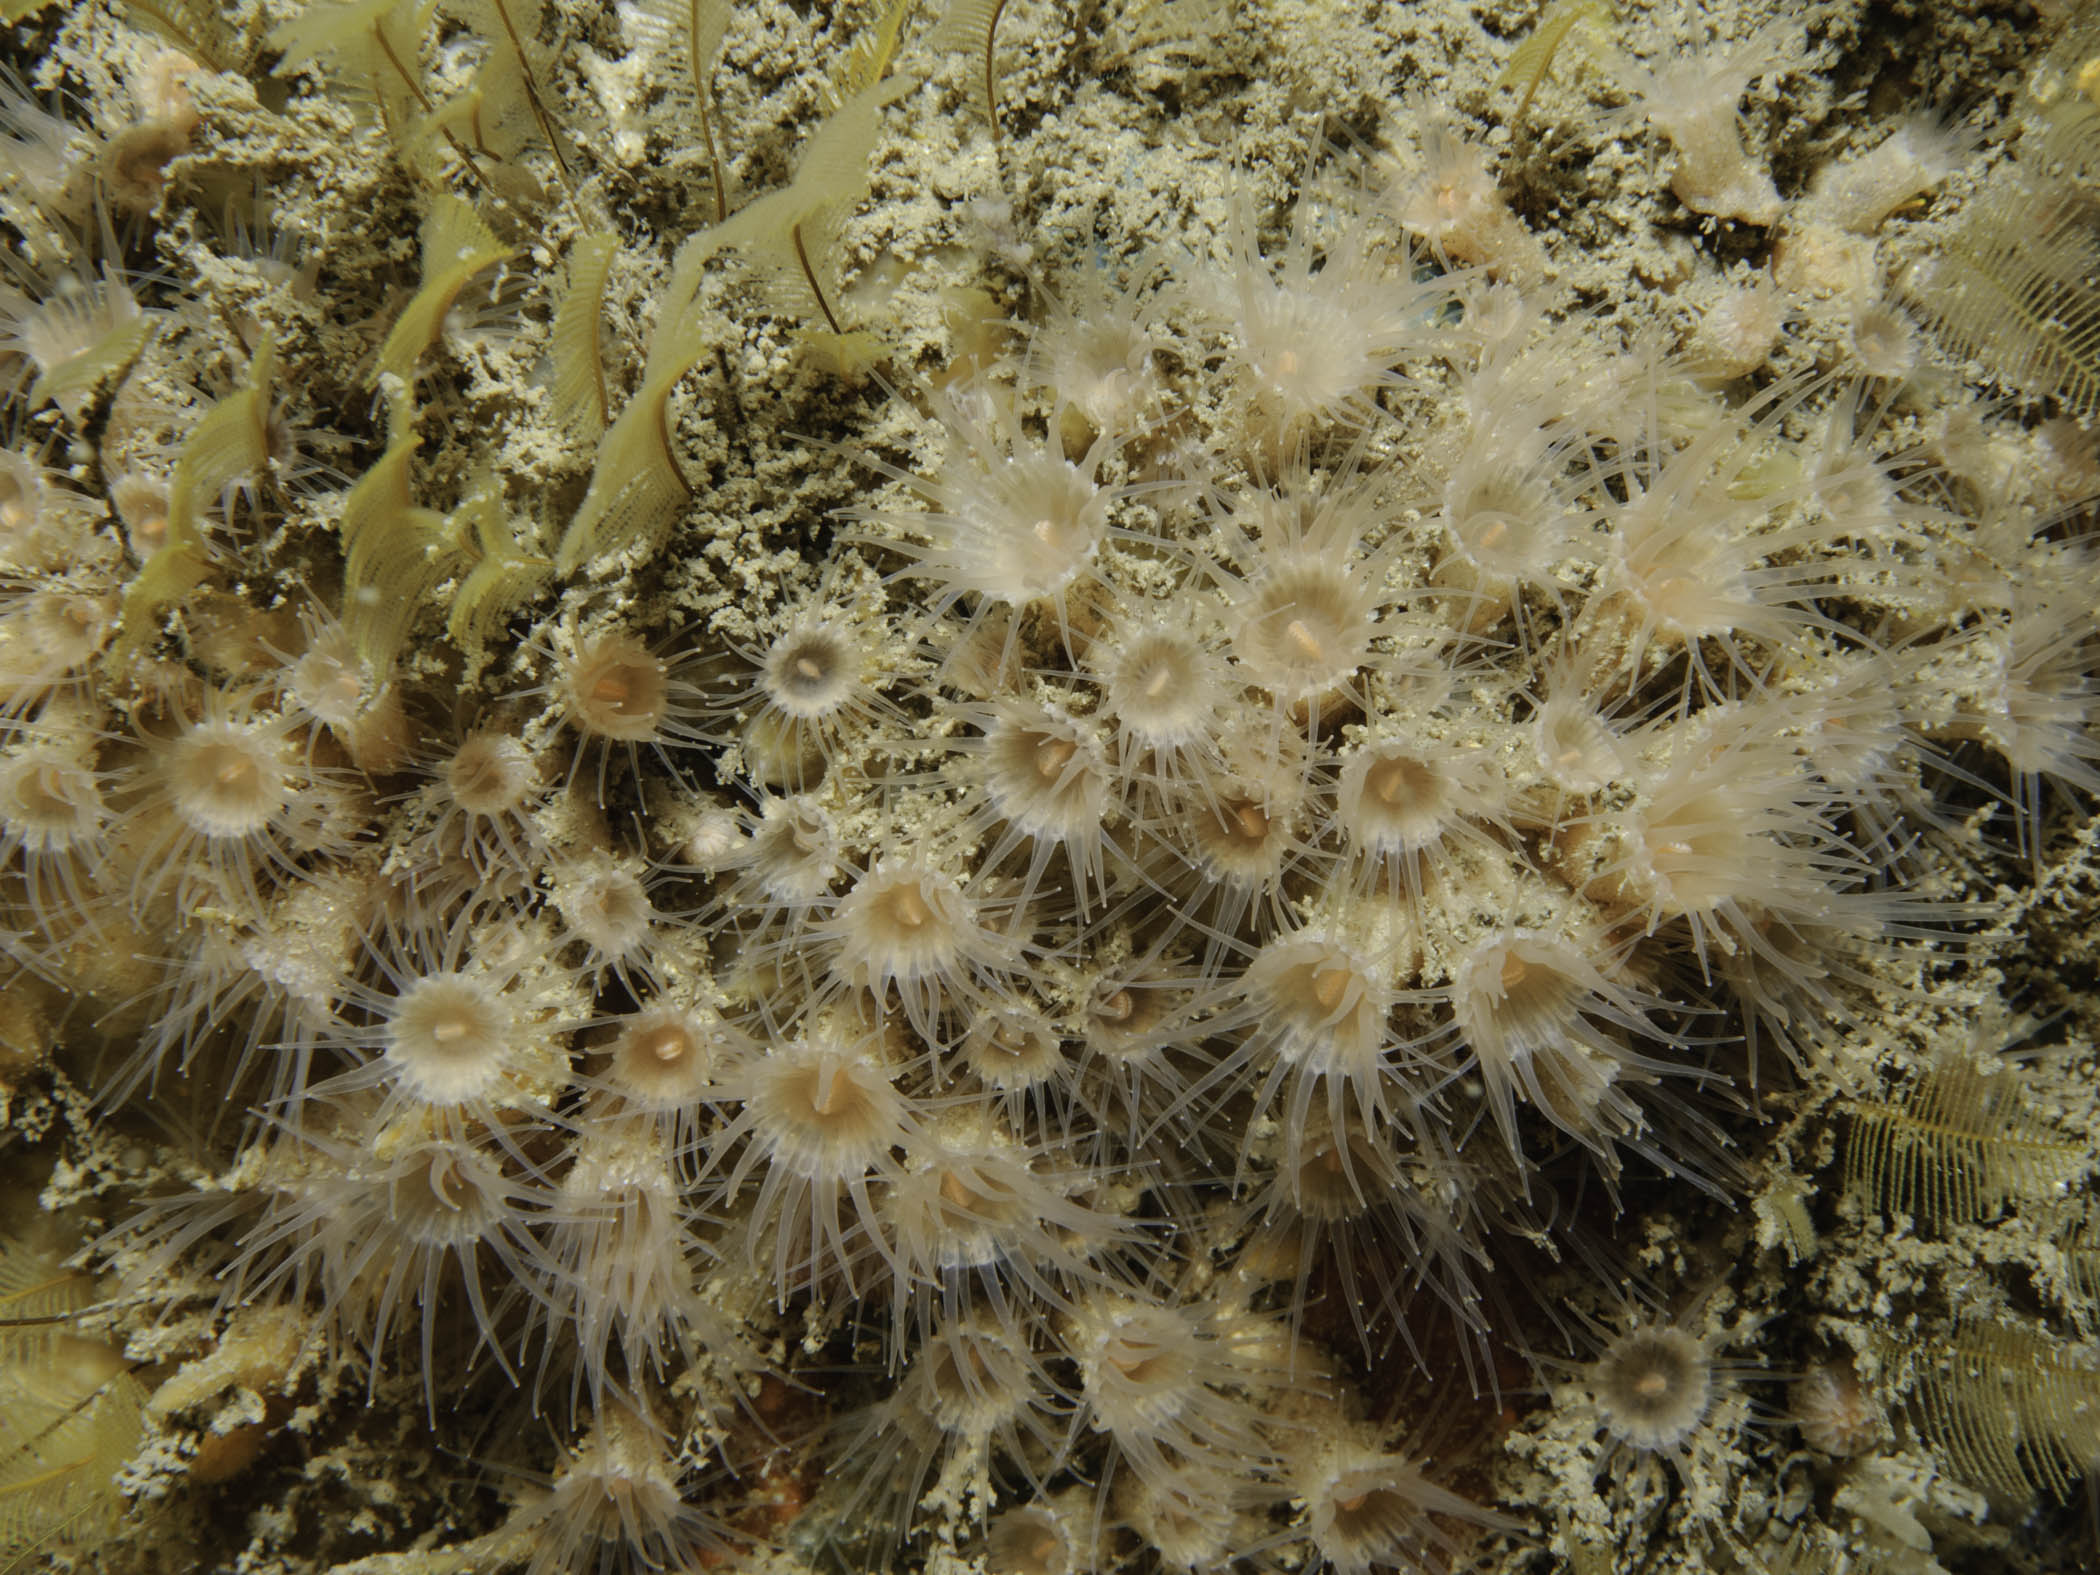 image: Epizoanthus couchii. Rathlin Island, 2007.